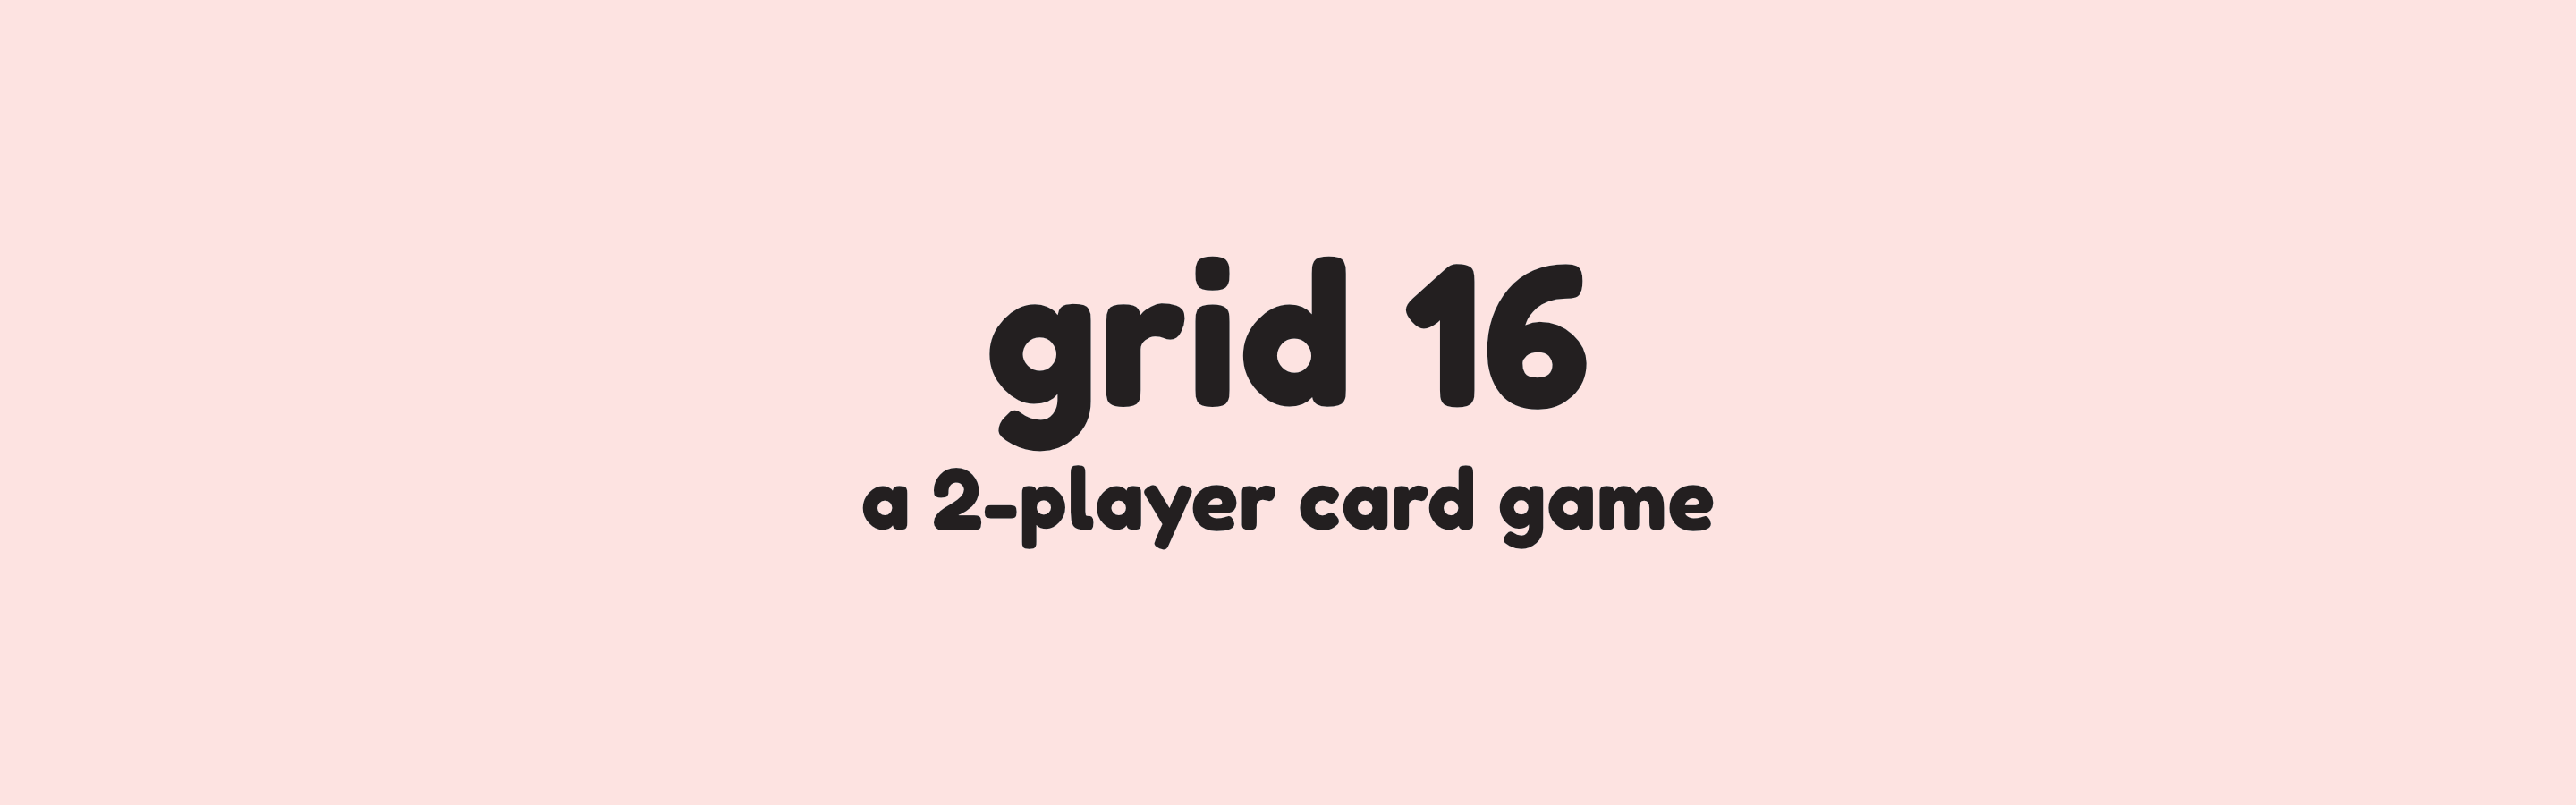 grid16